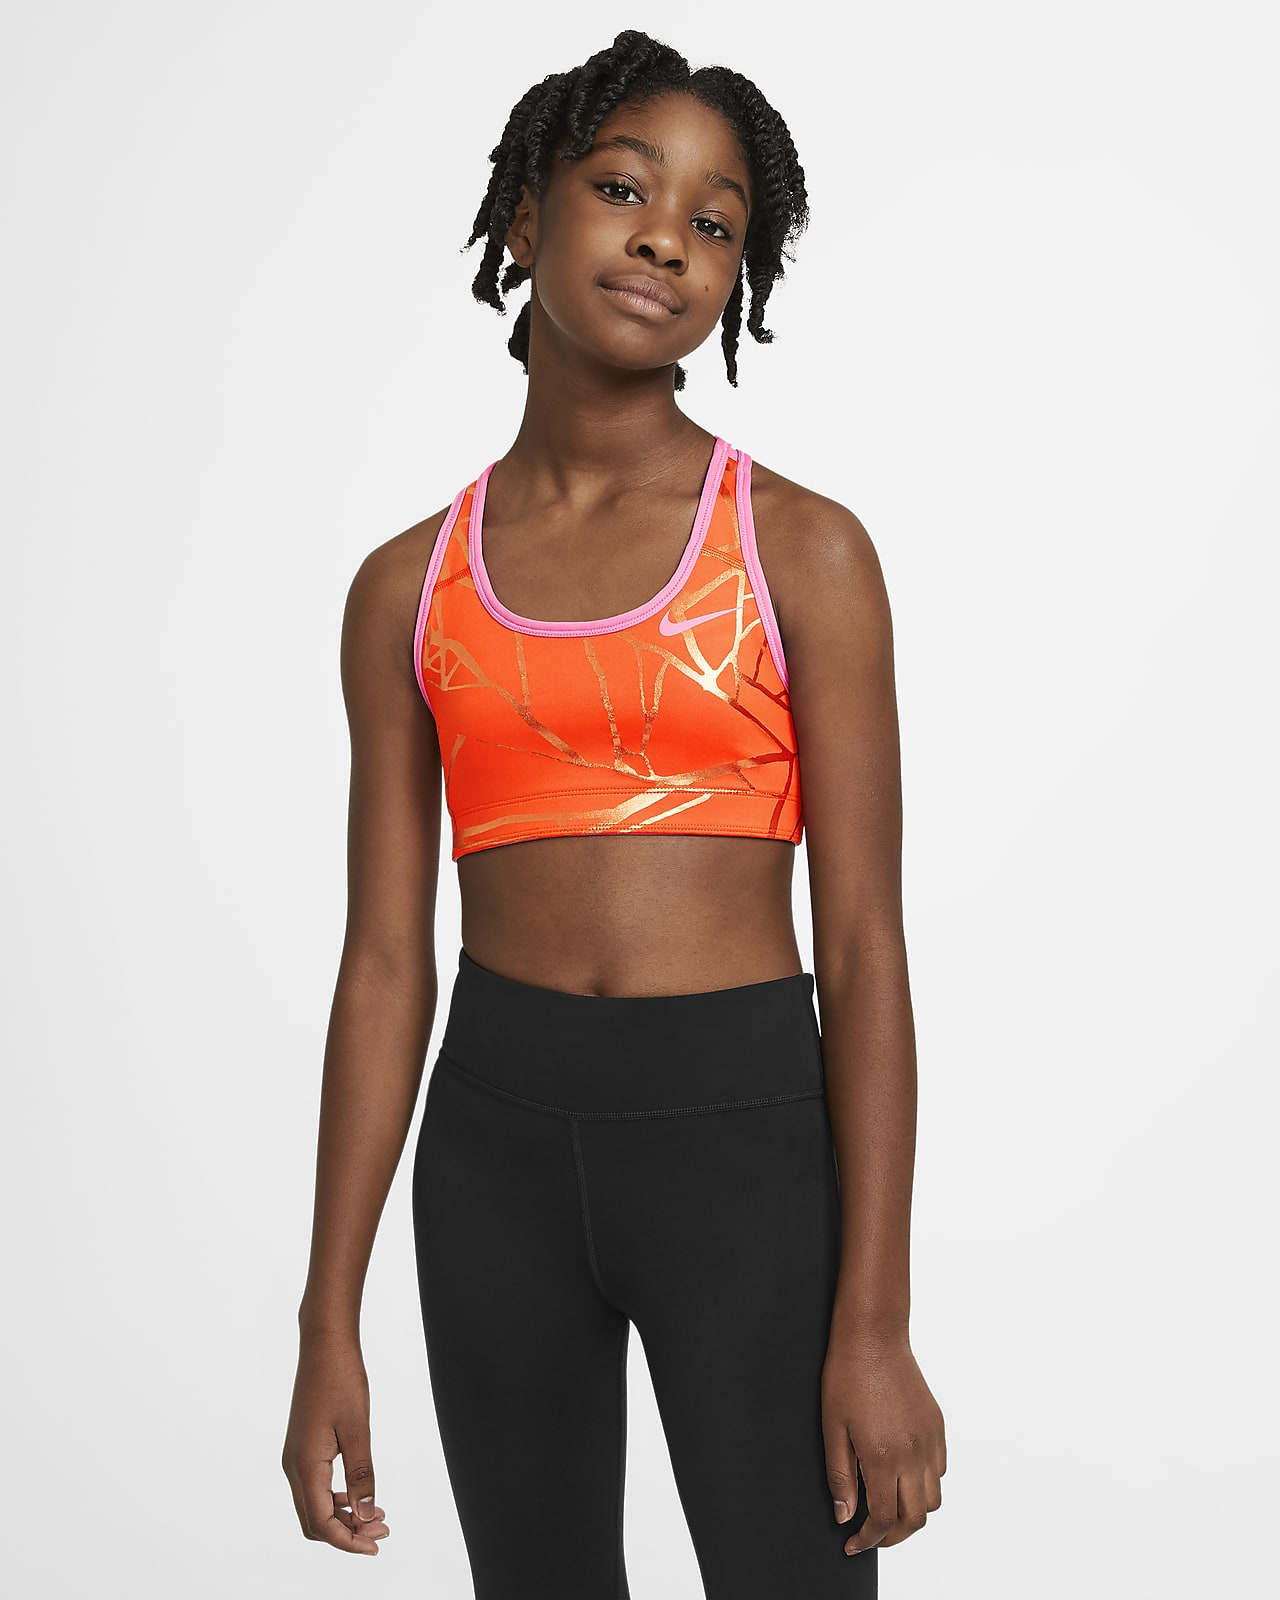 Nike Dri-FIT Swoosh Big Kids' (Girls') Reversible Printed Sports Bra.